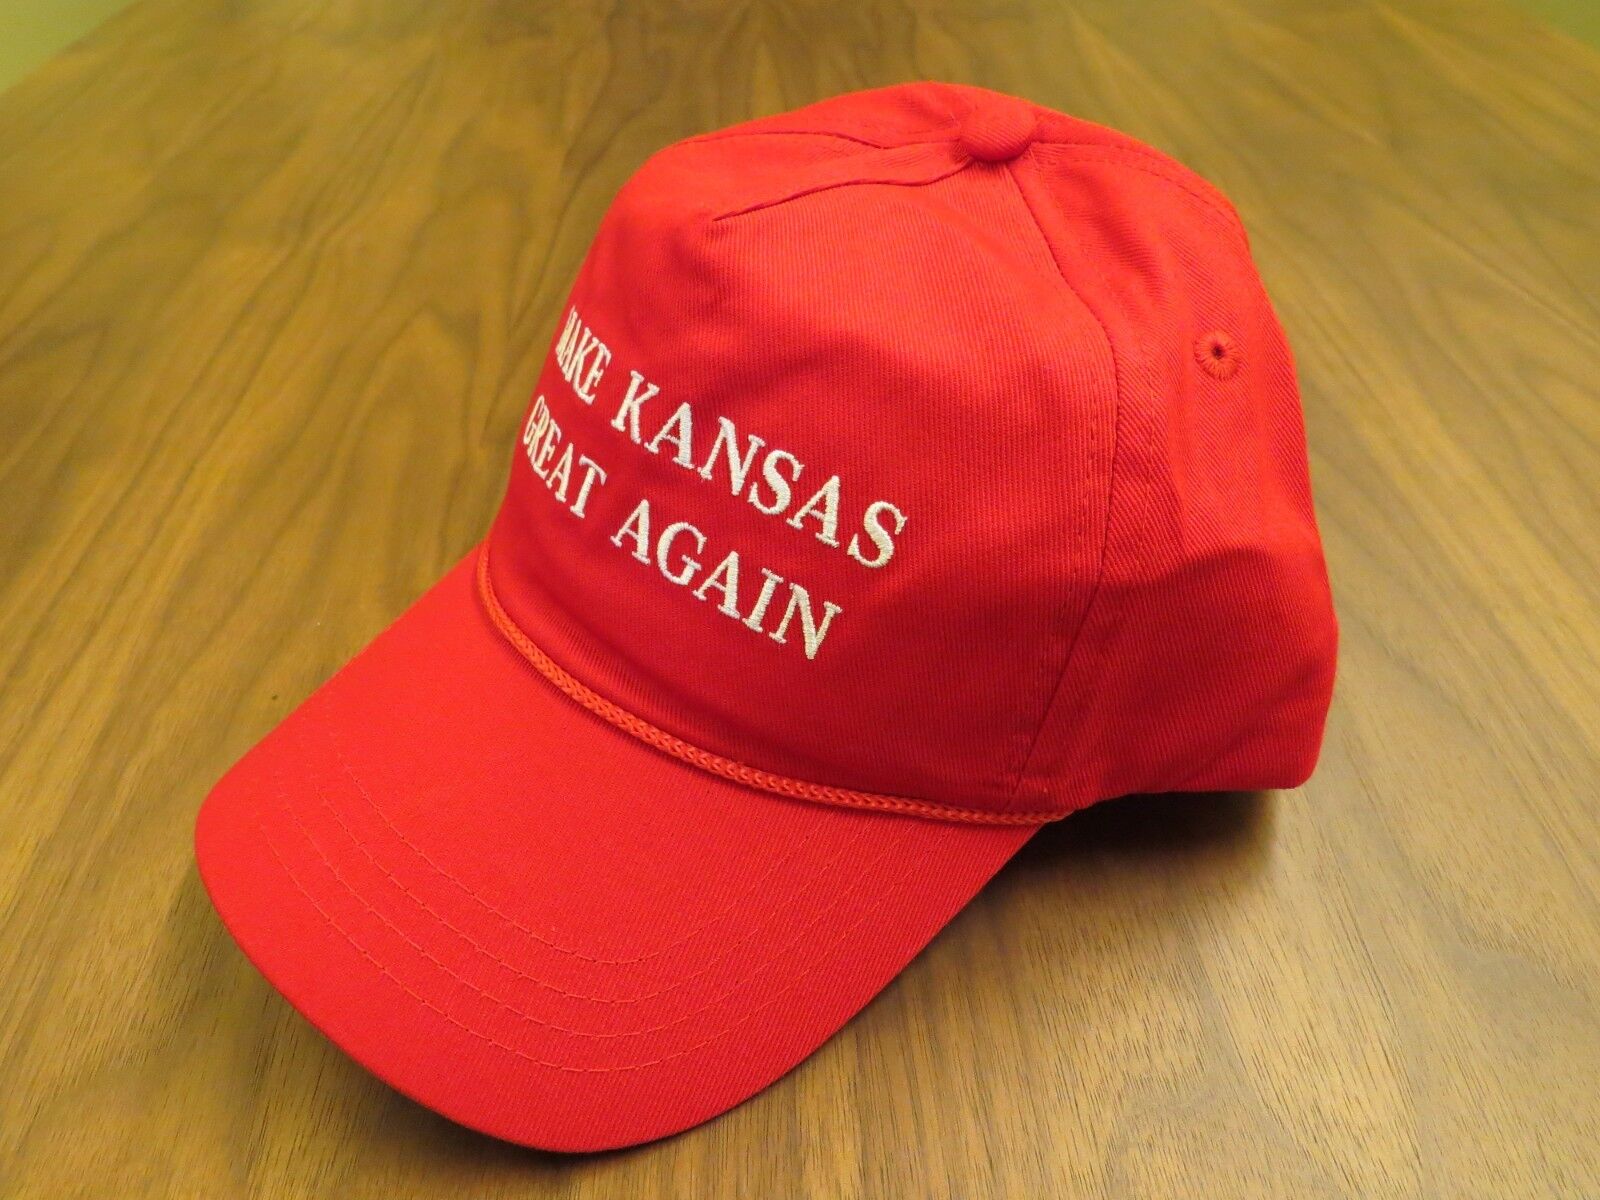 MAKE KANSAS GREAT AGAIN USA HAT DONALD TRUMP AMERICA EMBROIDERED CAP RED KU